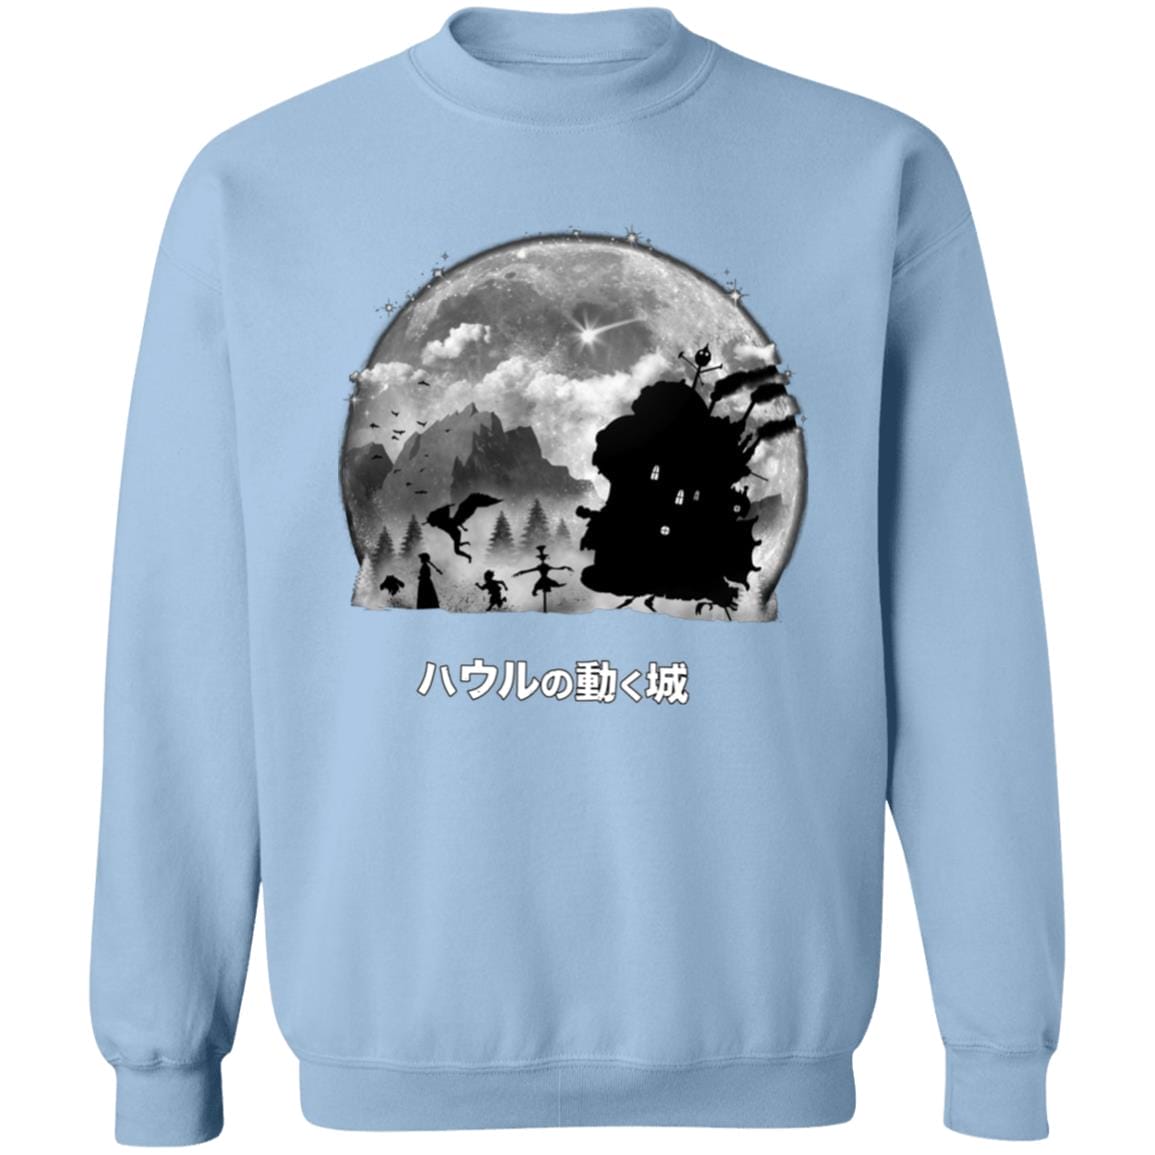 Howl’s Moving Castle – Walking in the Night Sweatshirt